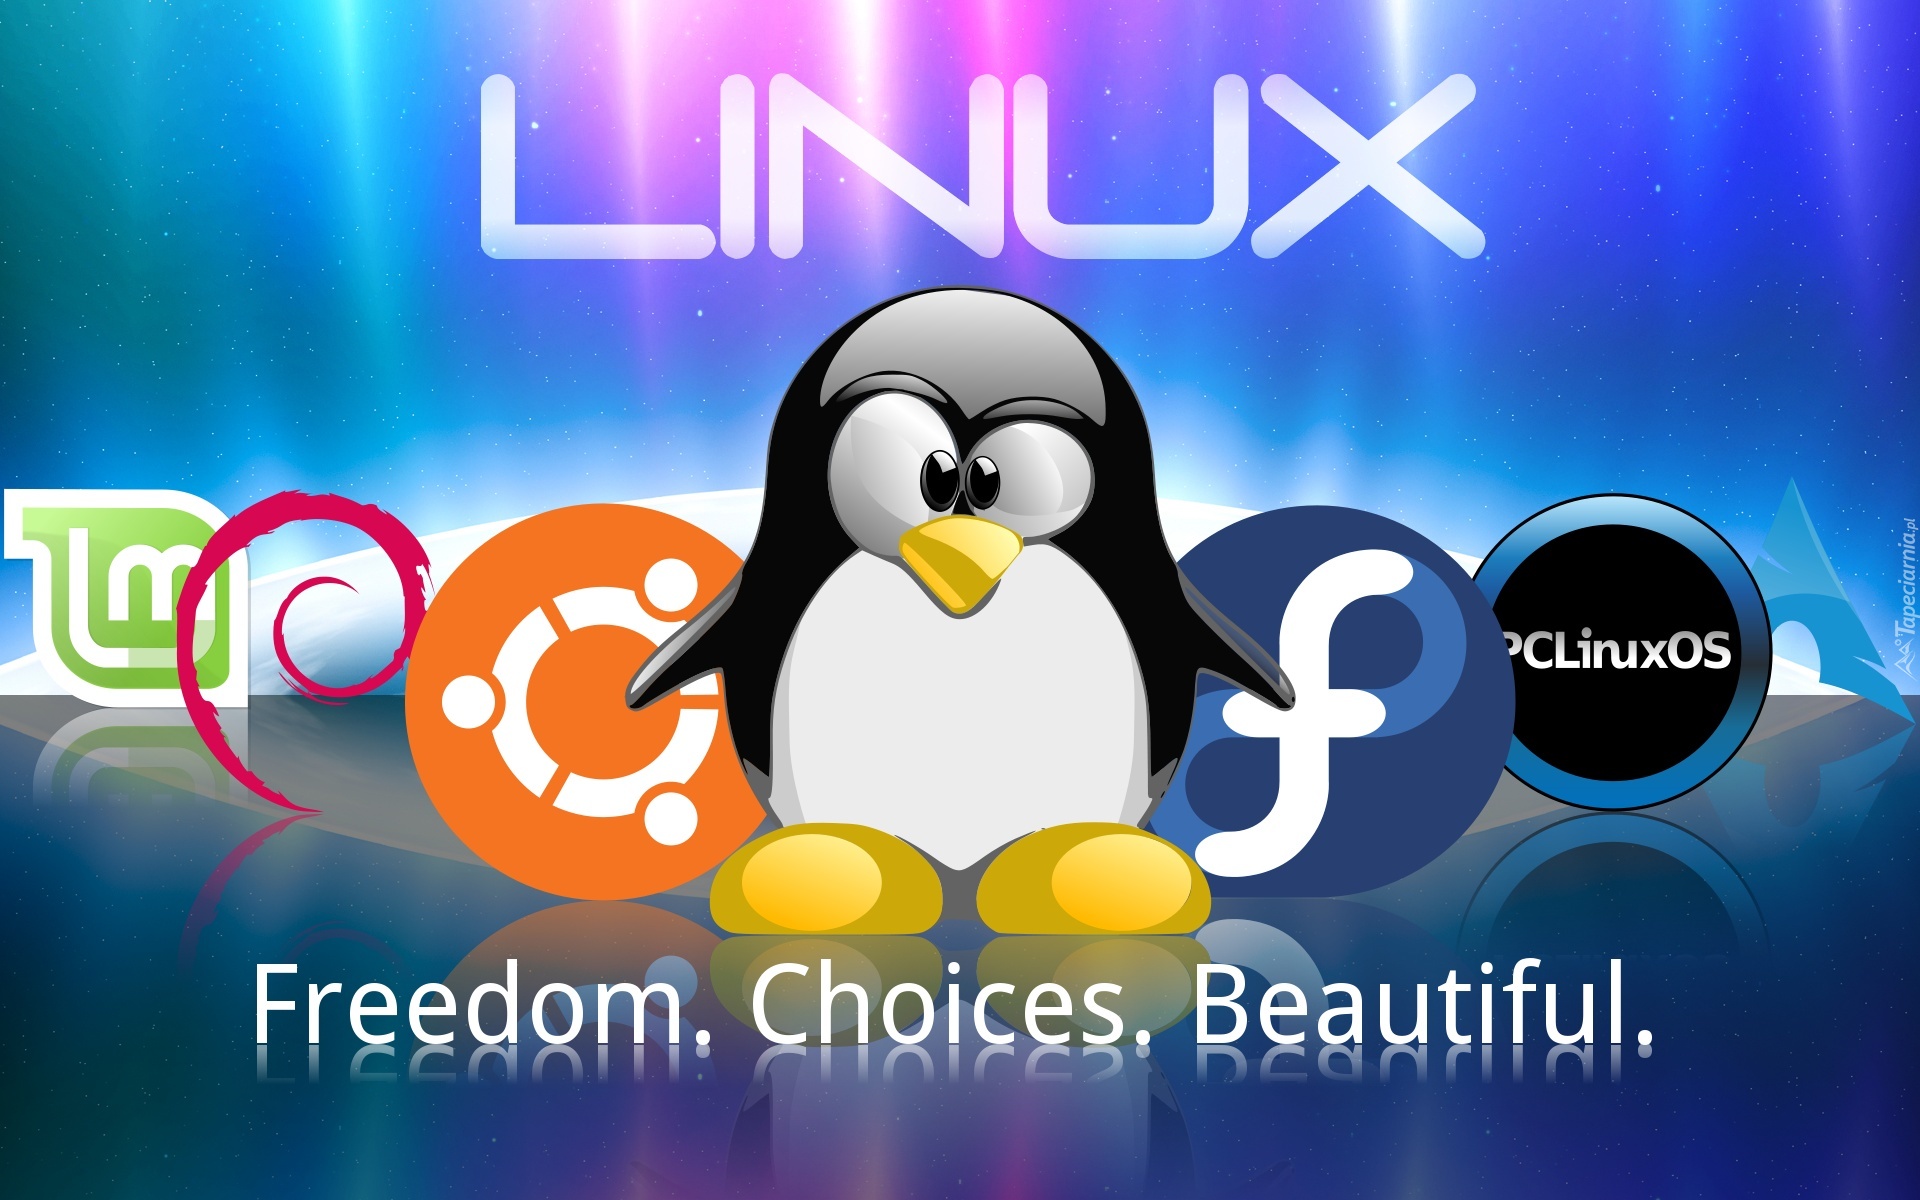 gitx for linux free